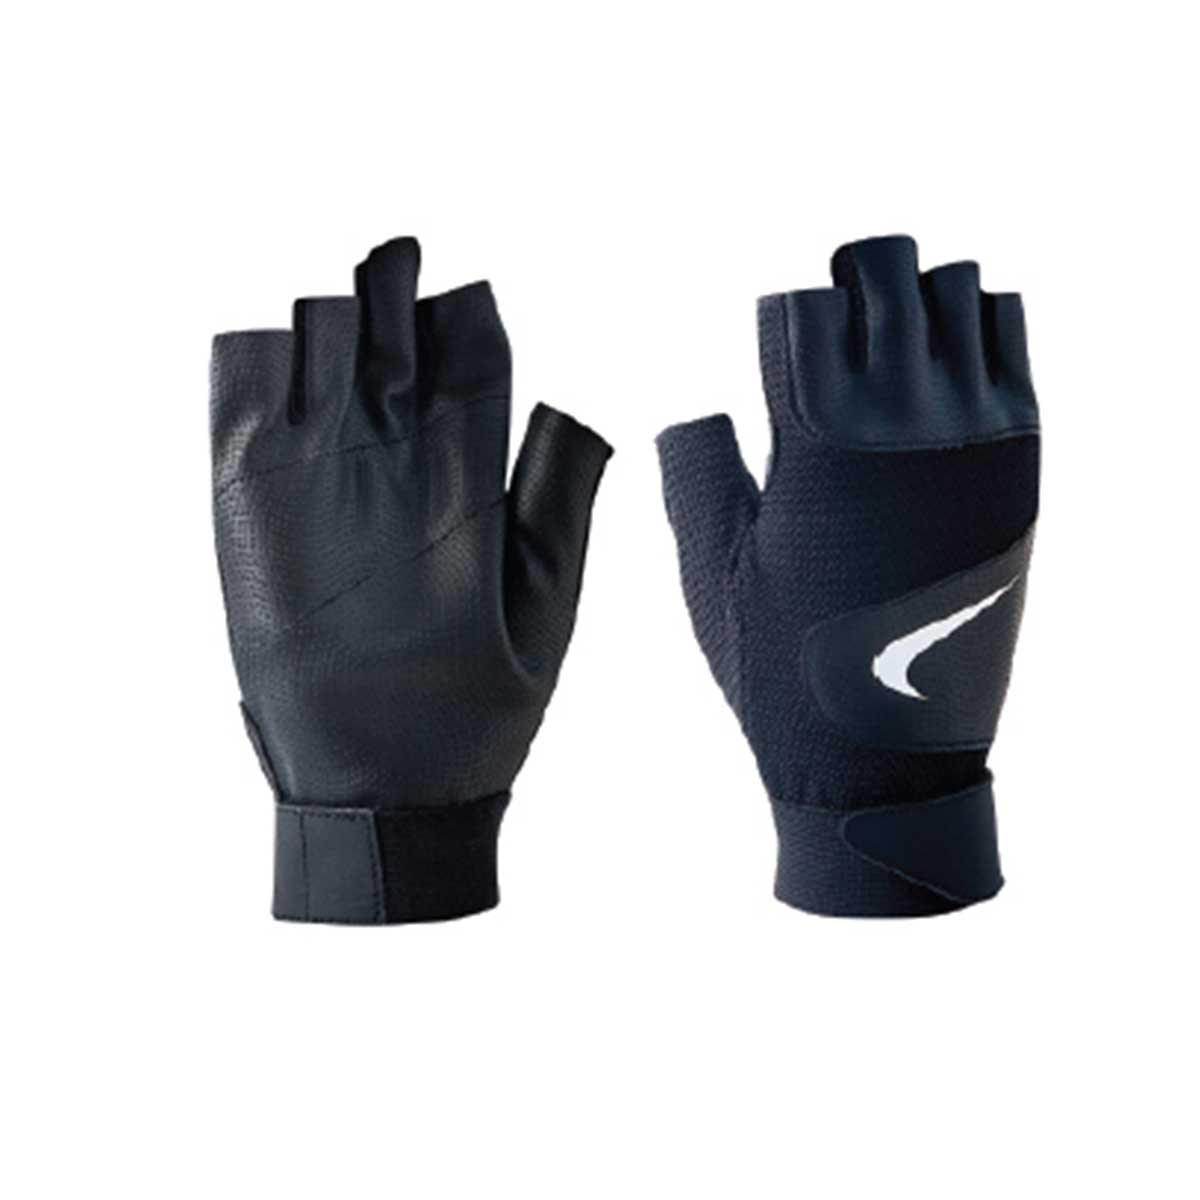 Nike Workout Gloves - WorkoutWalls